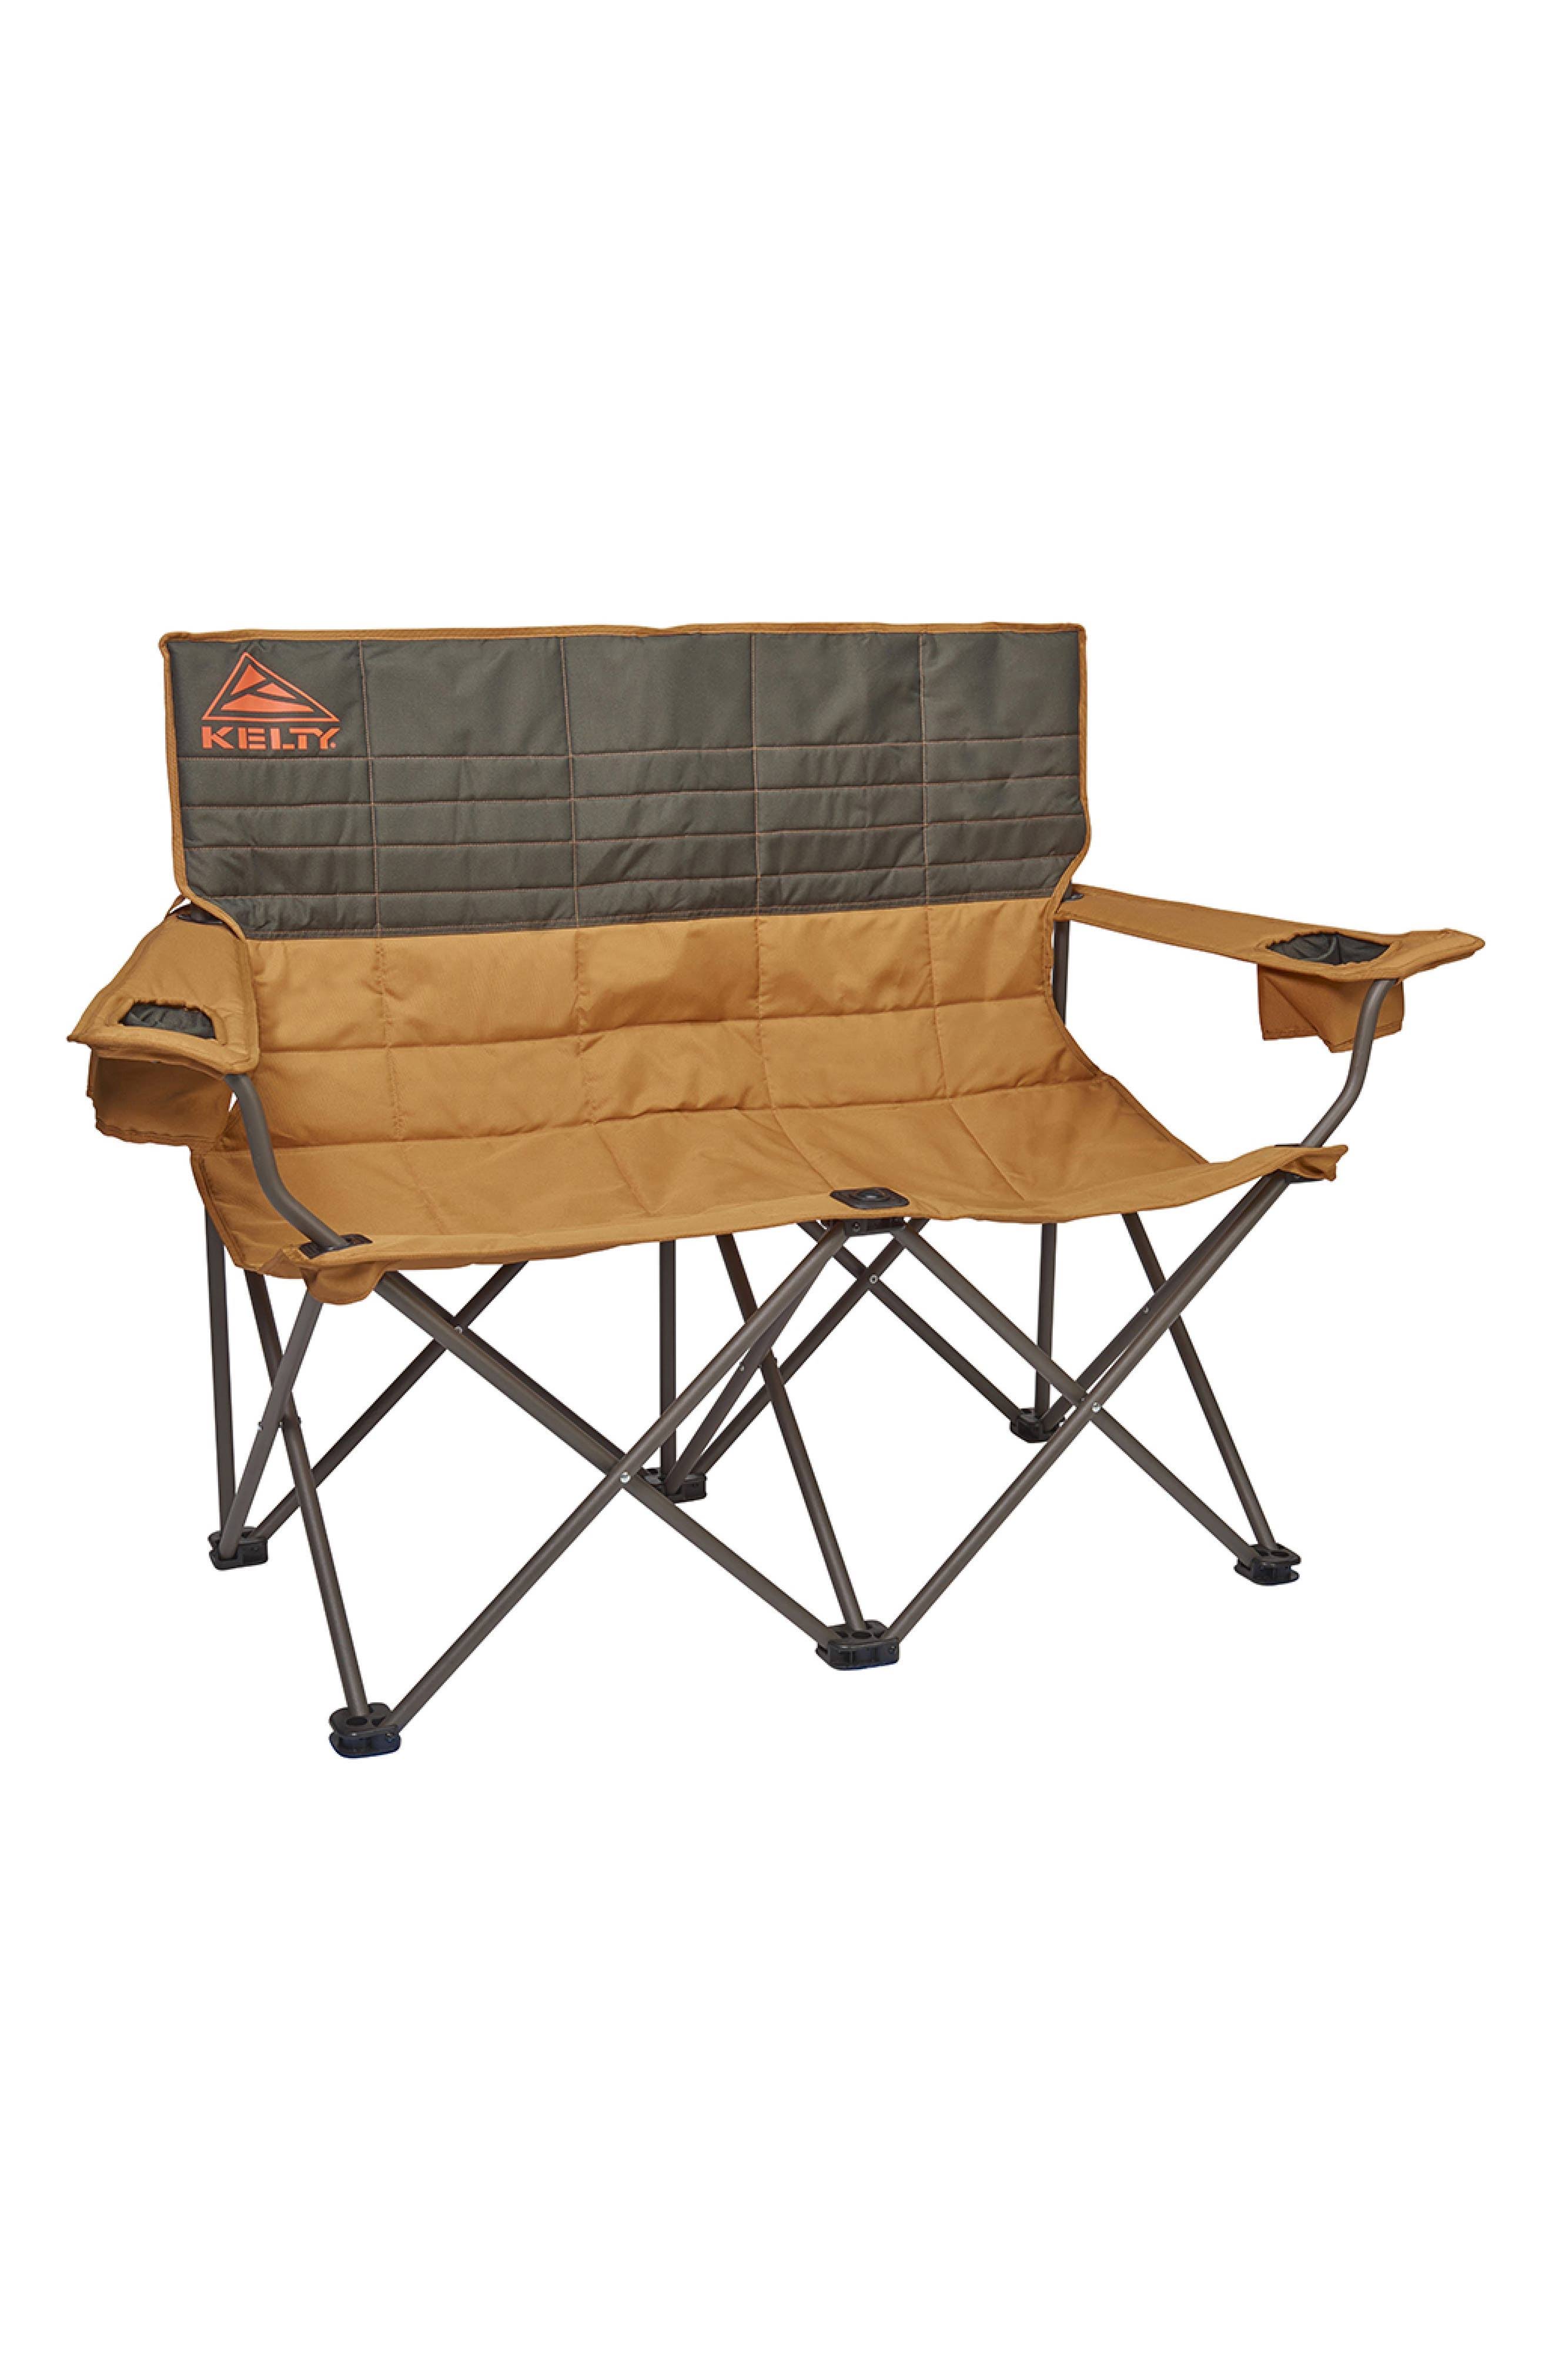 Kelty Loveseat Camping Chair - Canyon Brown Beluga